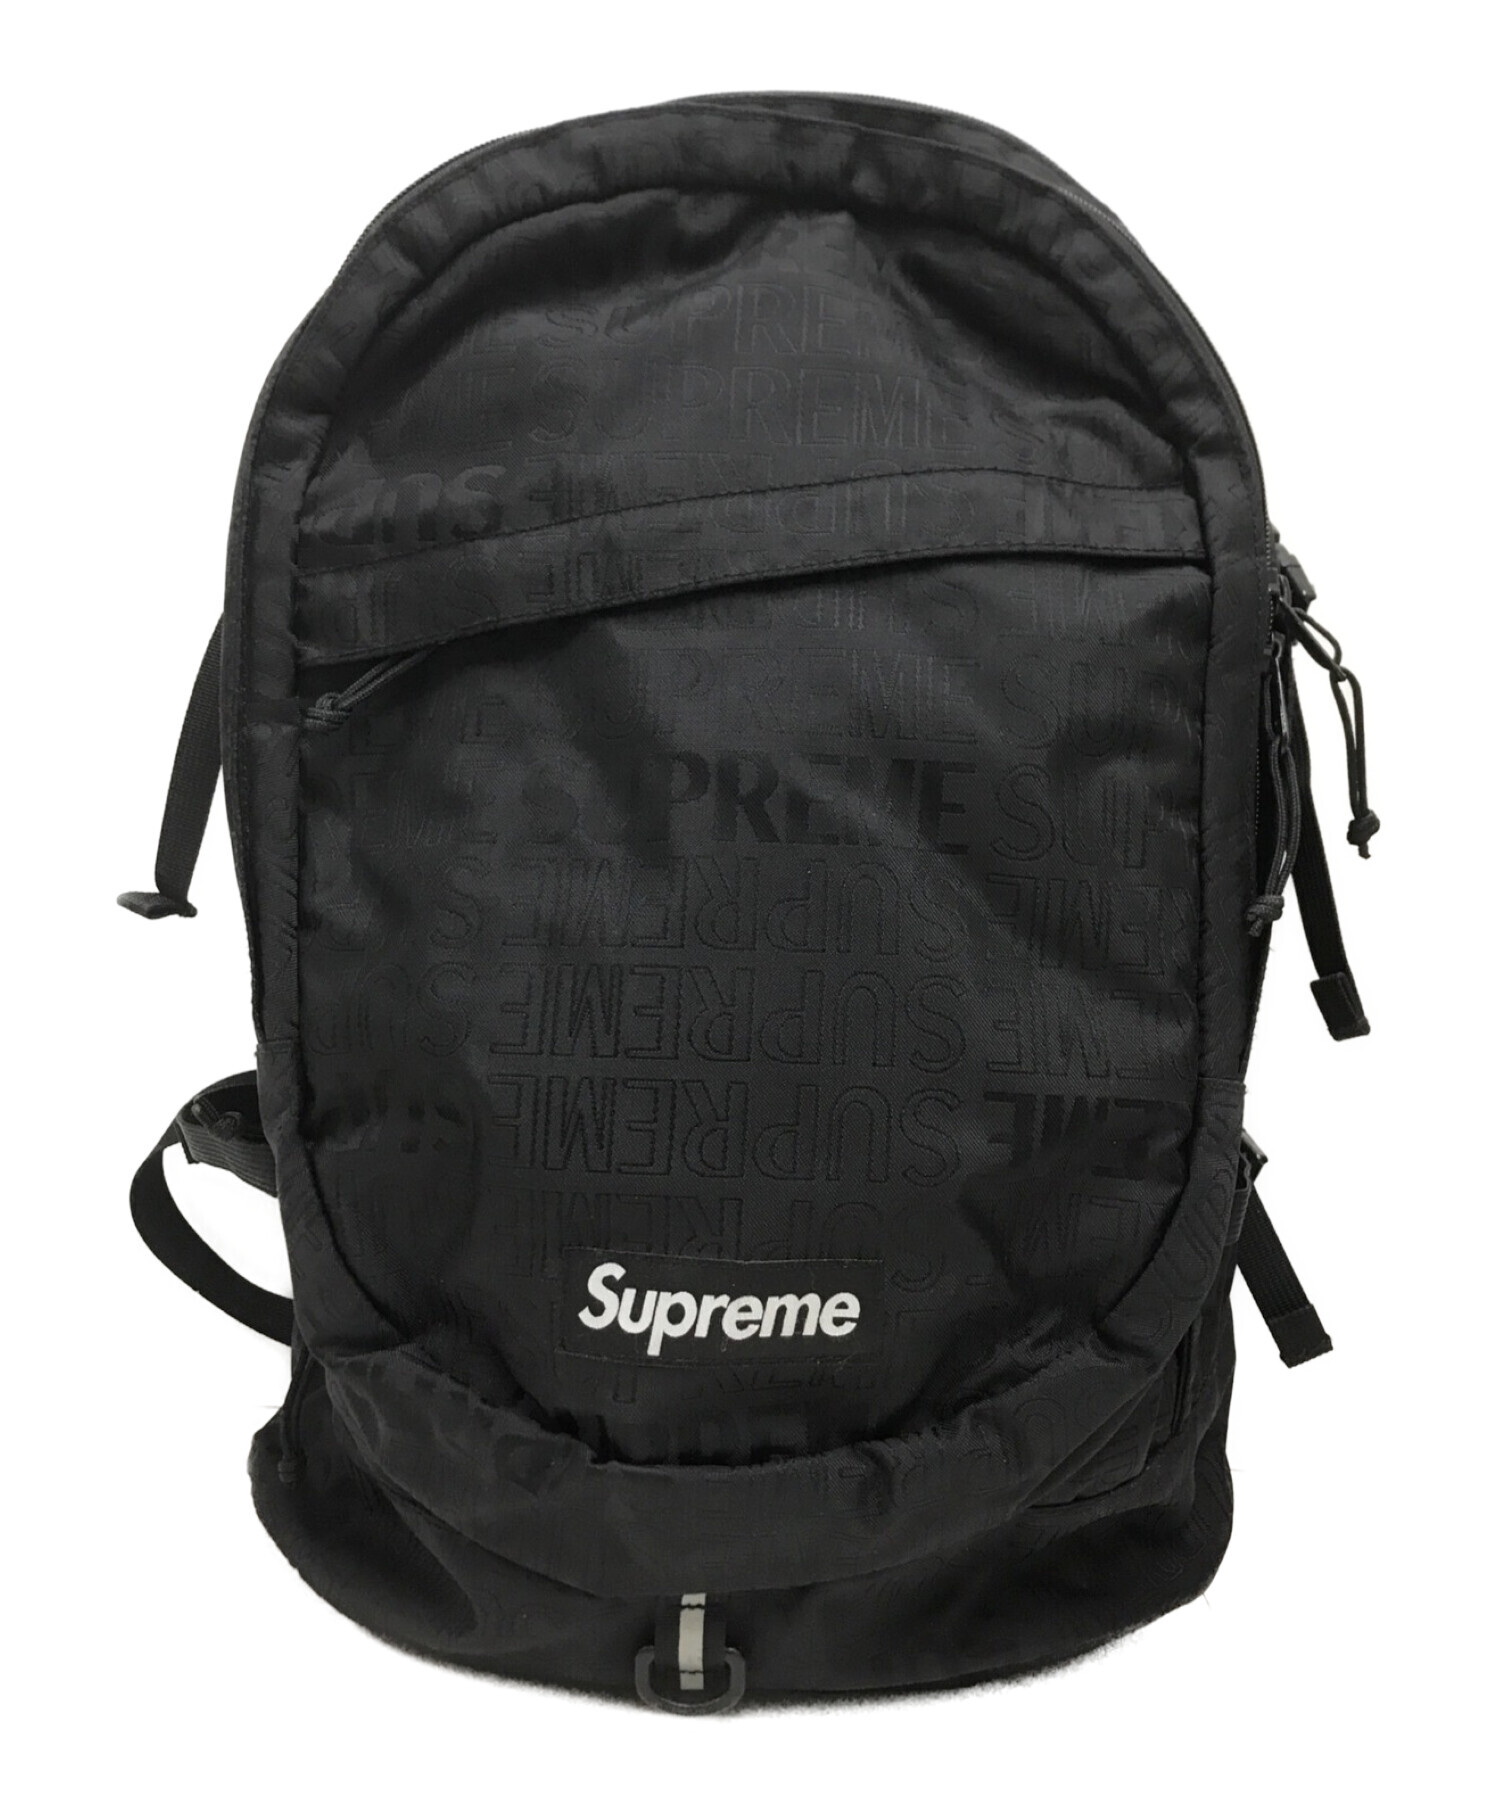 19SS supreme backpack シュプリーム